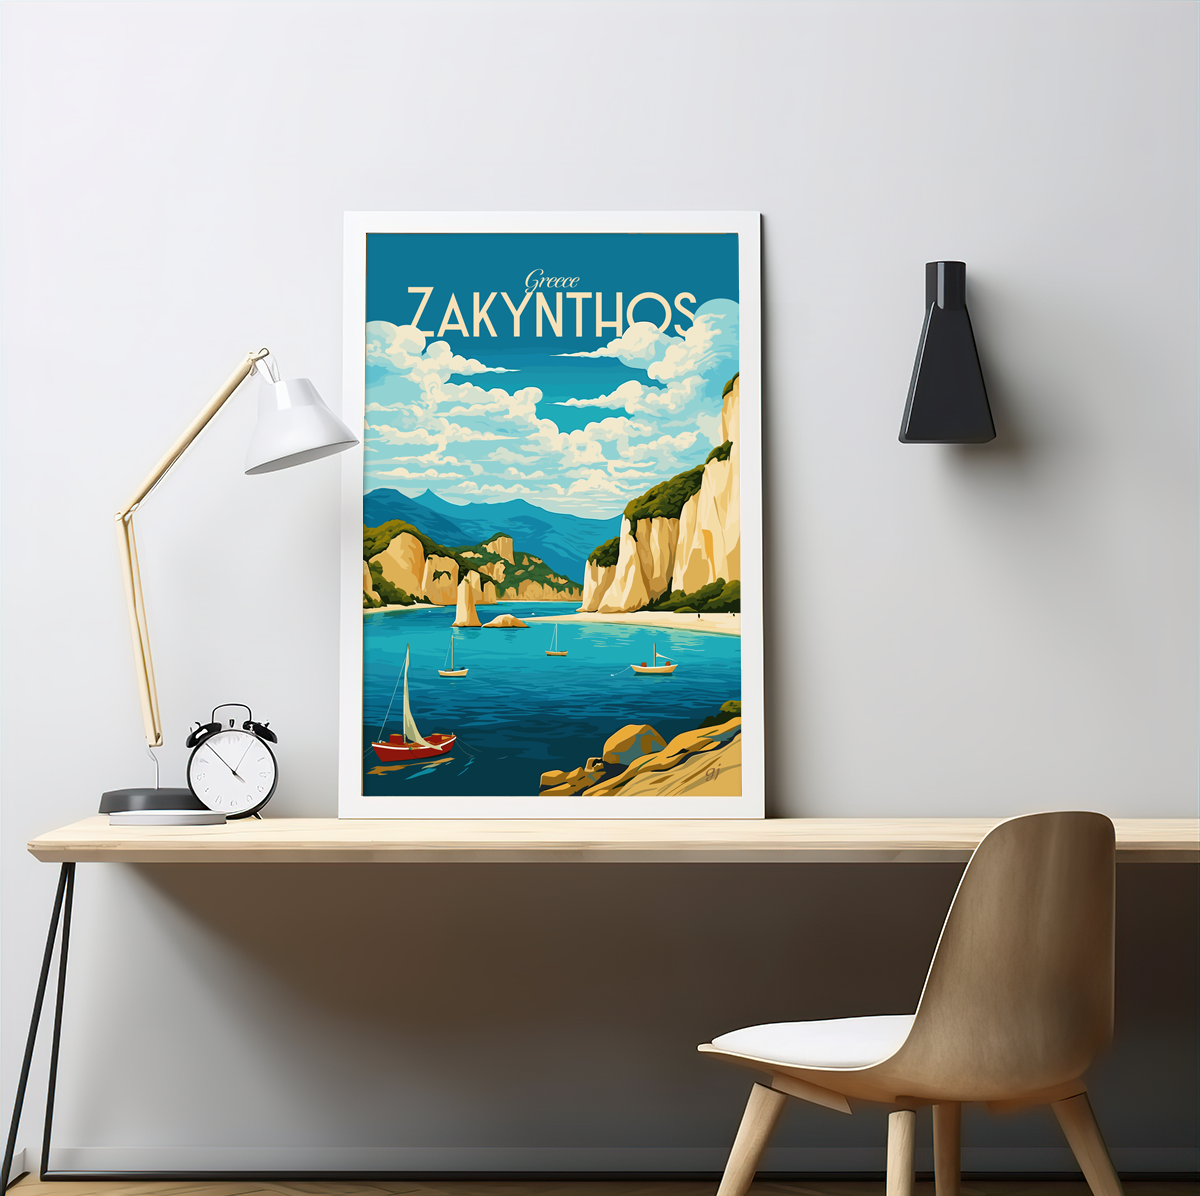 Zakynthos poster by bon voyage design